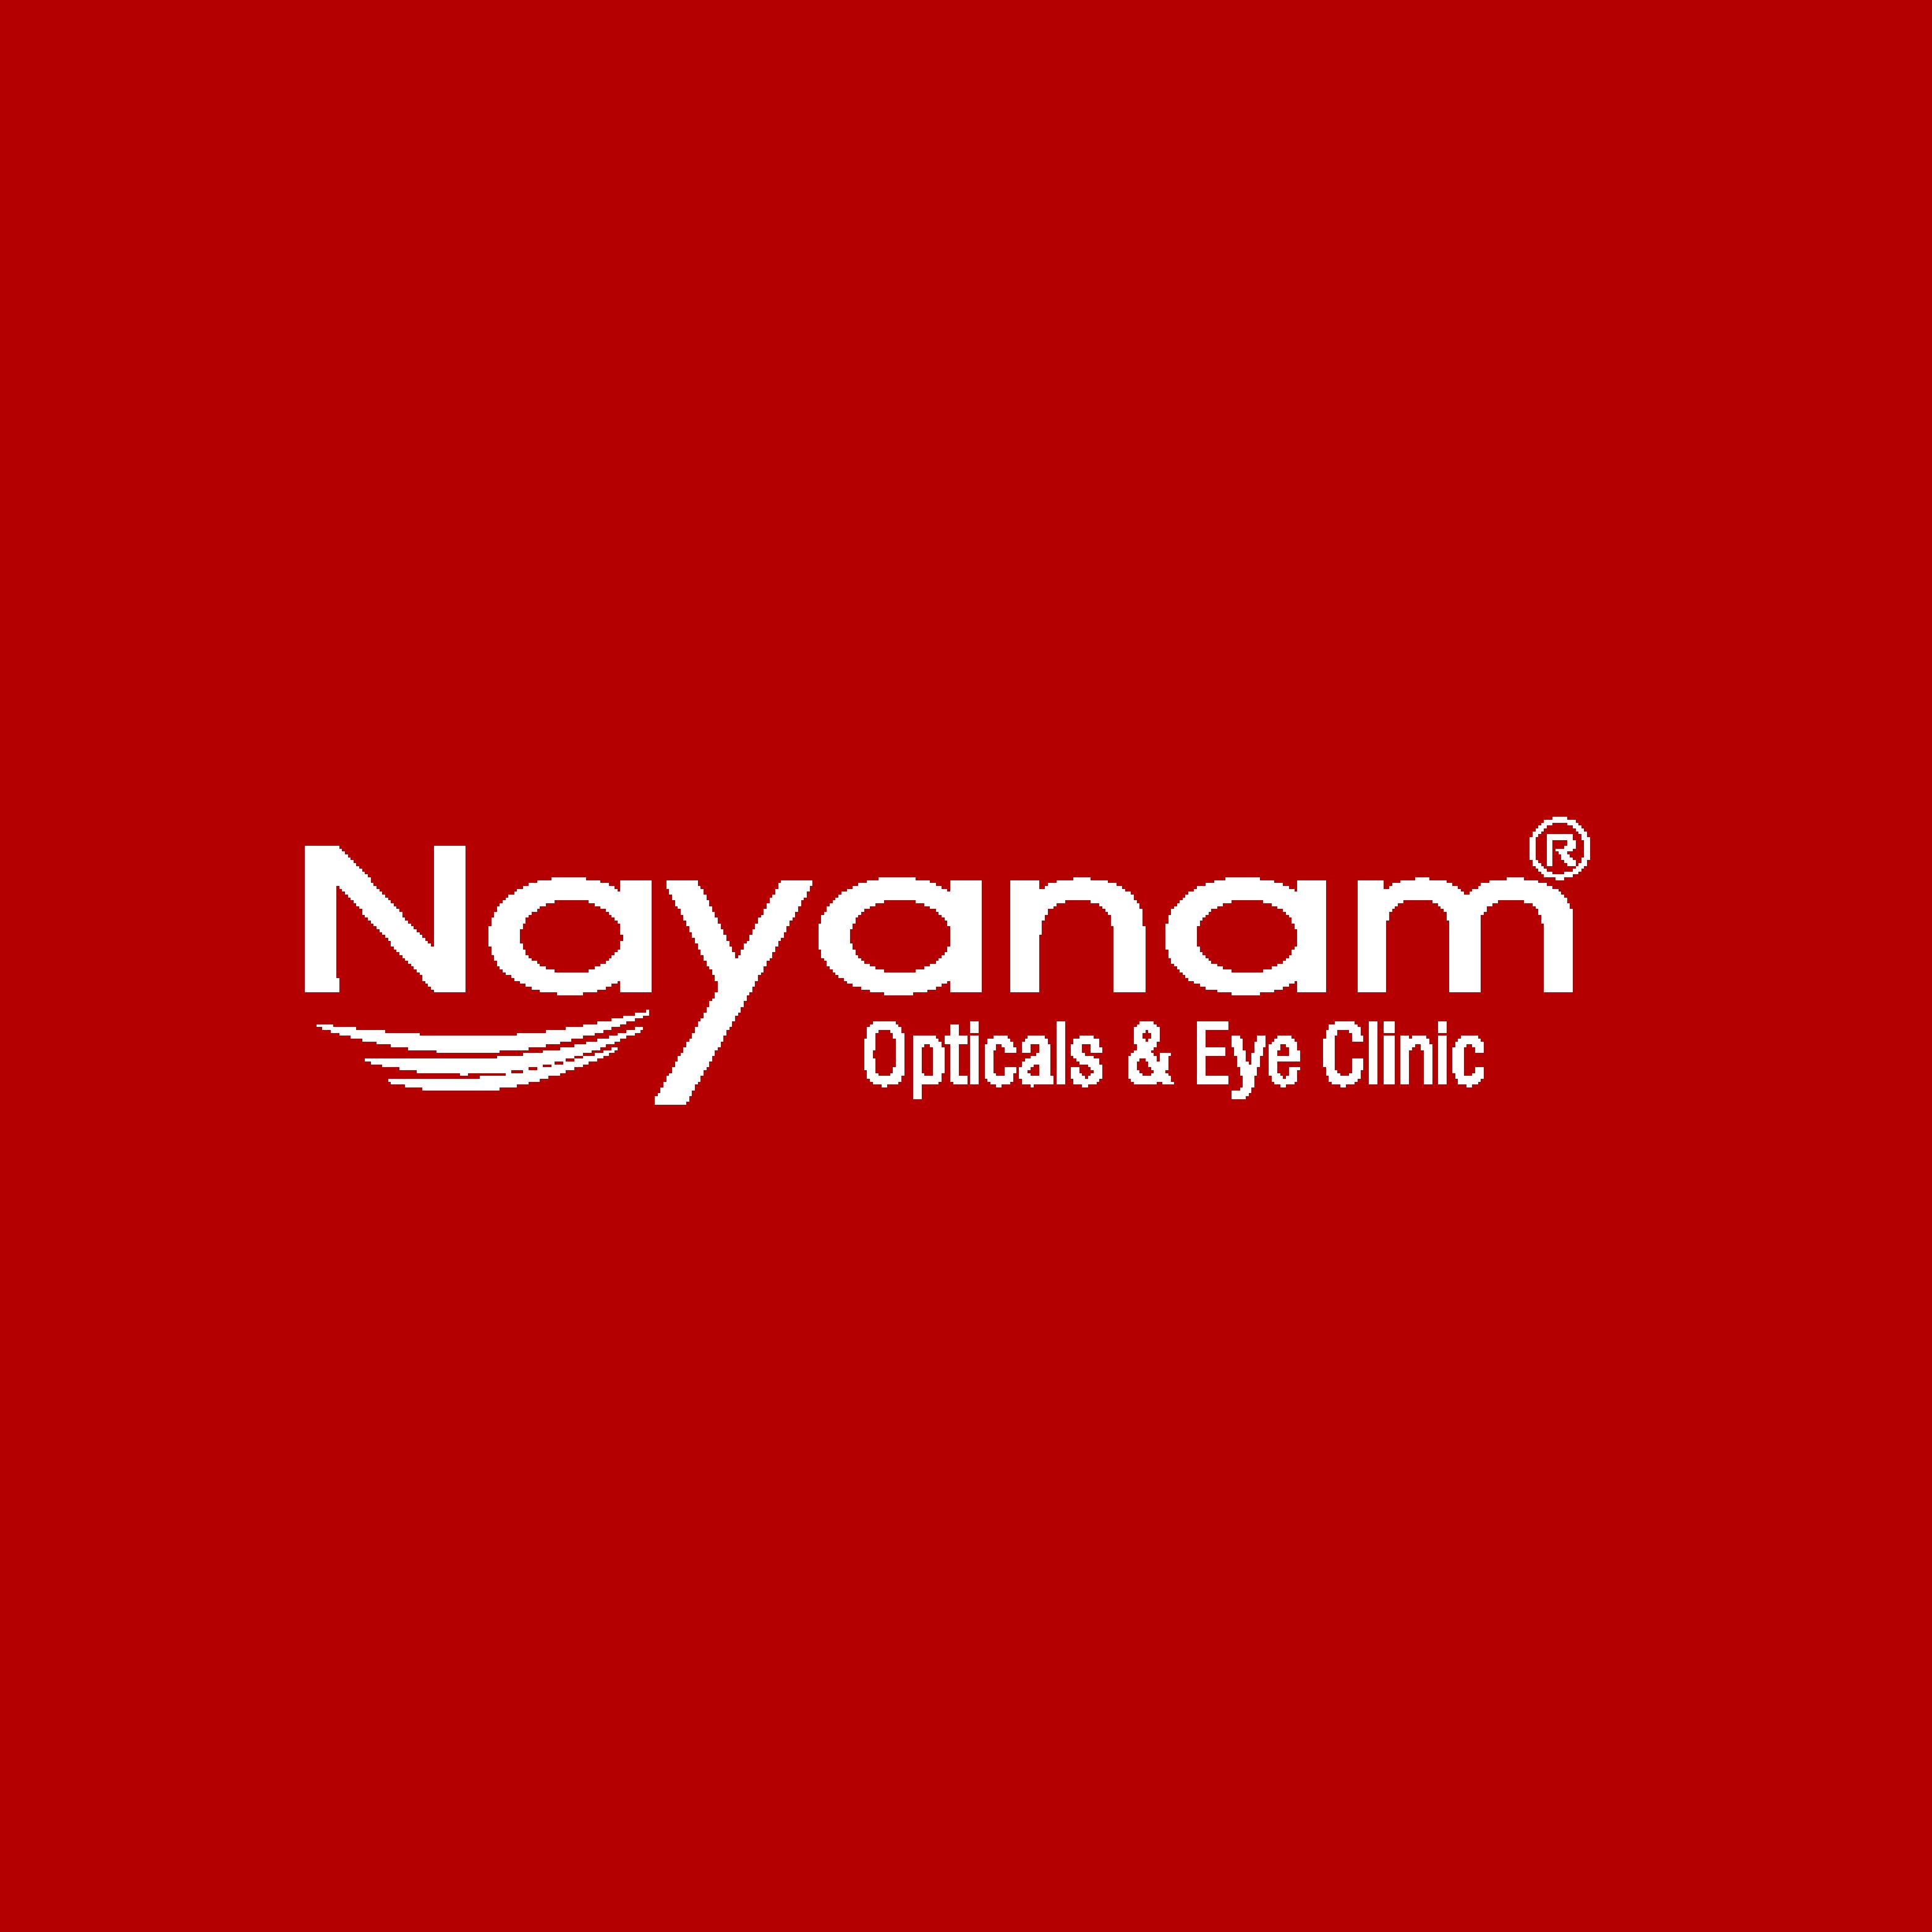 Nayanam Opticals & Eye Clinic - Logo